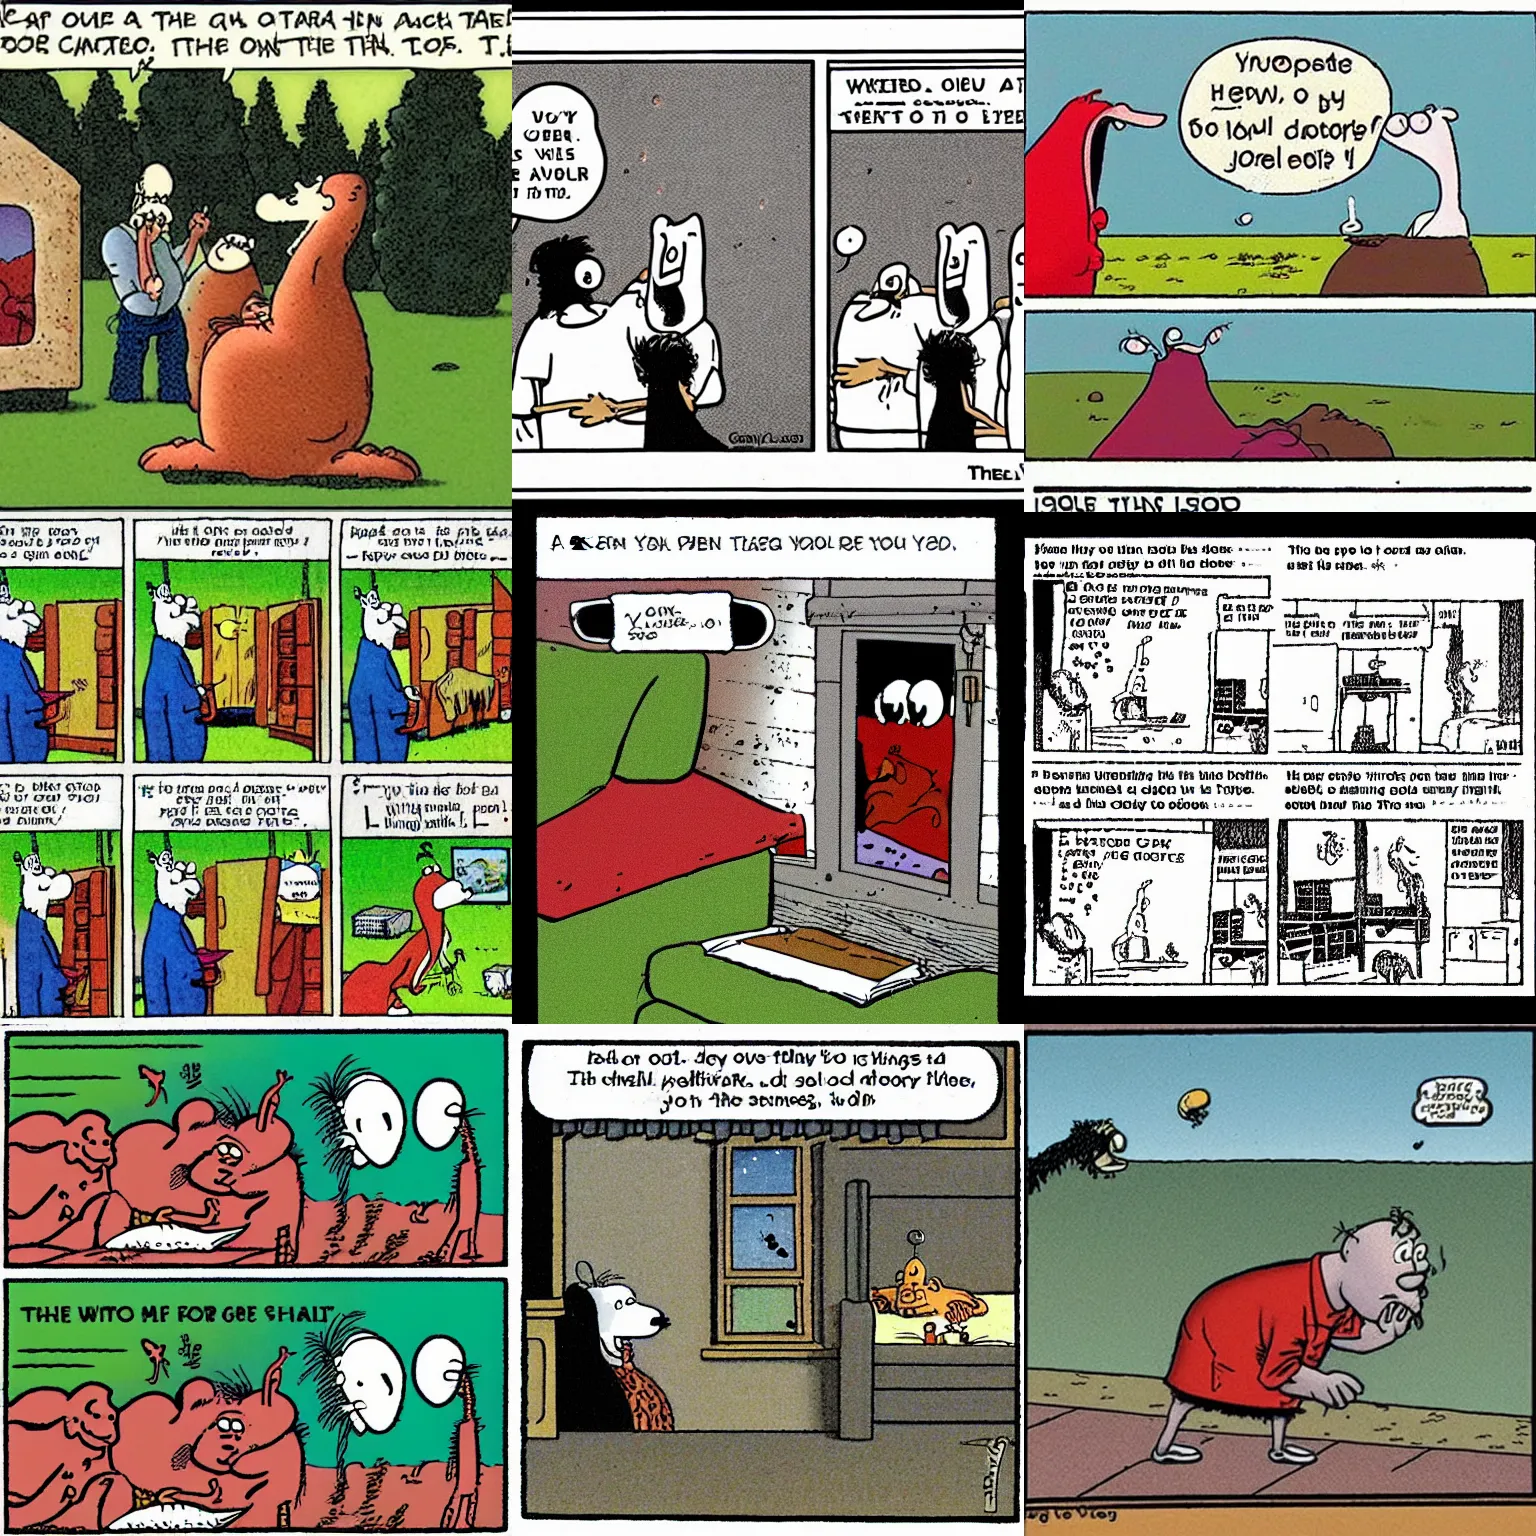 Prompt: a single panel comic strip by gary larson